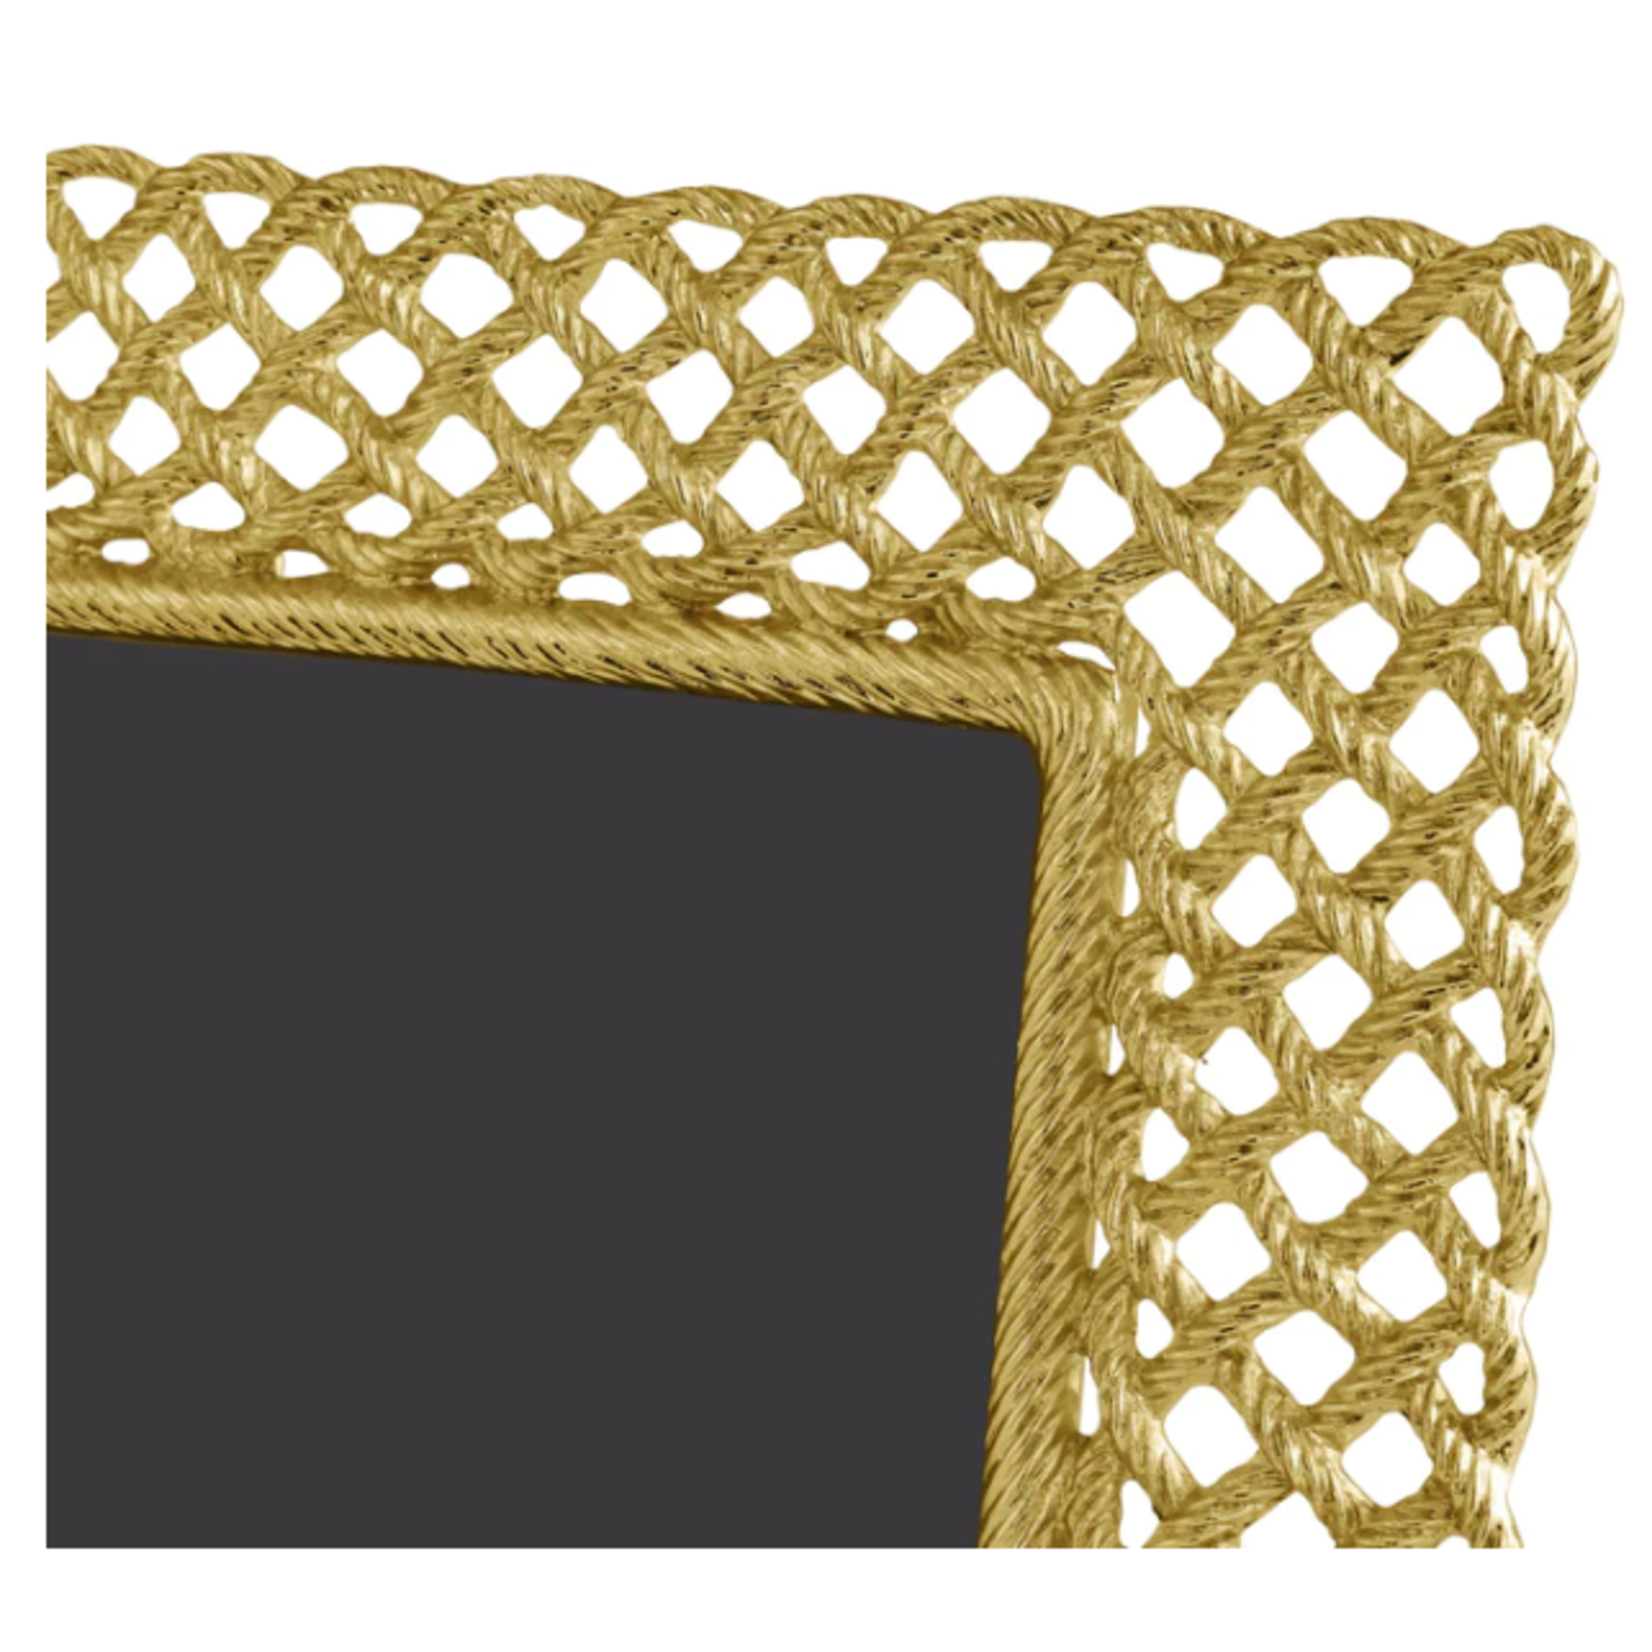 Michael Aram Love Knot Frame - Gold - 8x10